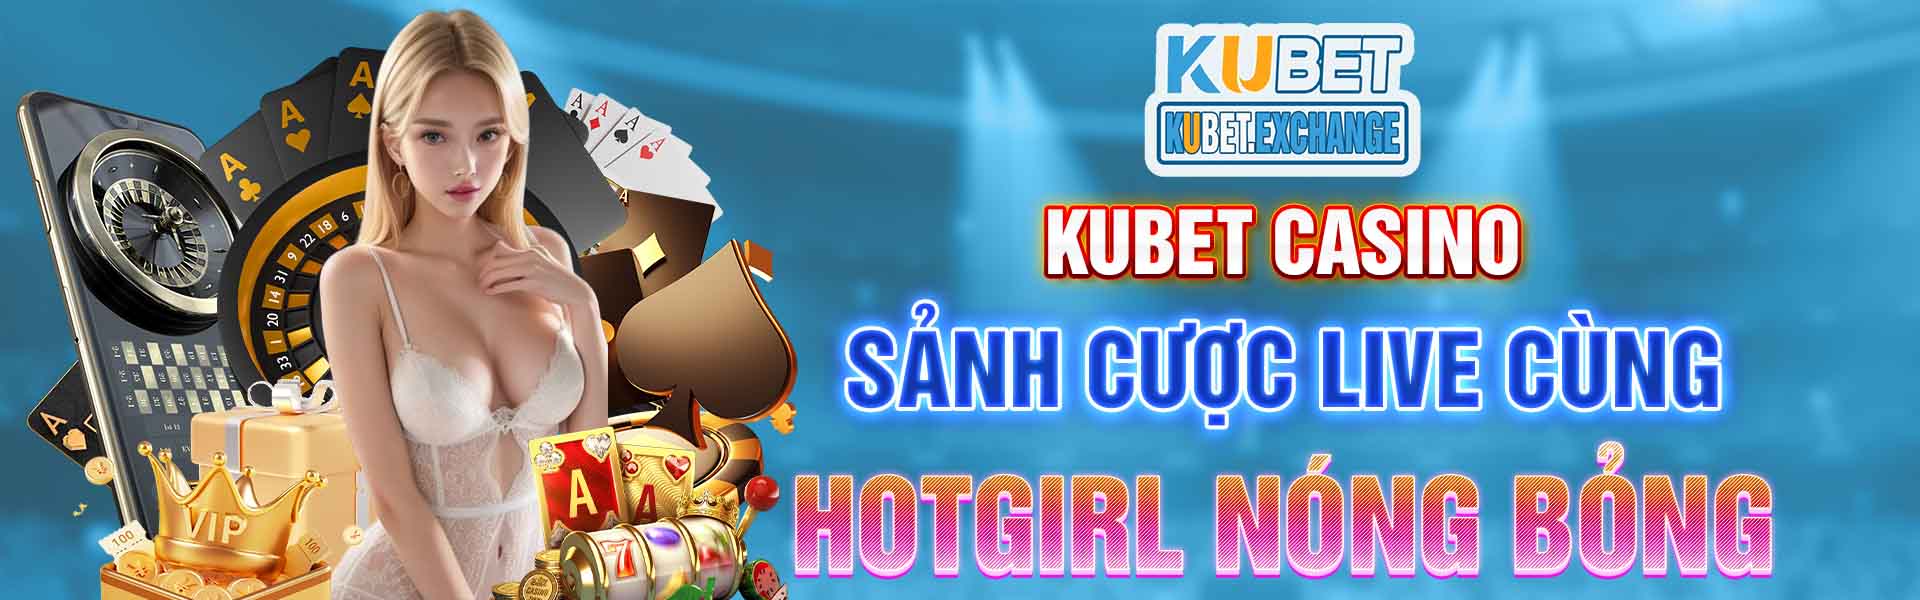 kubet-casino-sanh-cuoc-live-cung-hotgirl-nong-bong